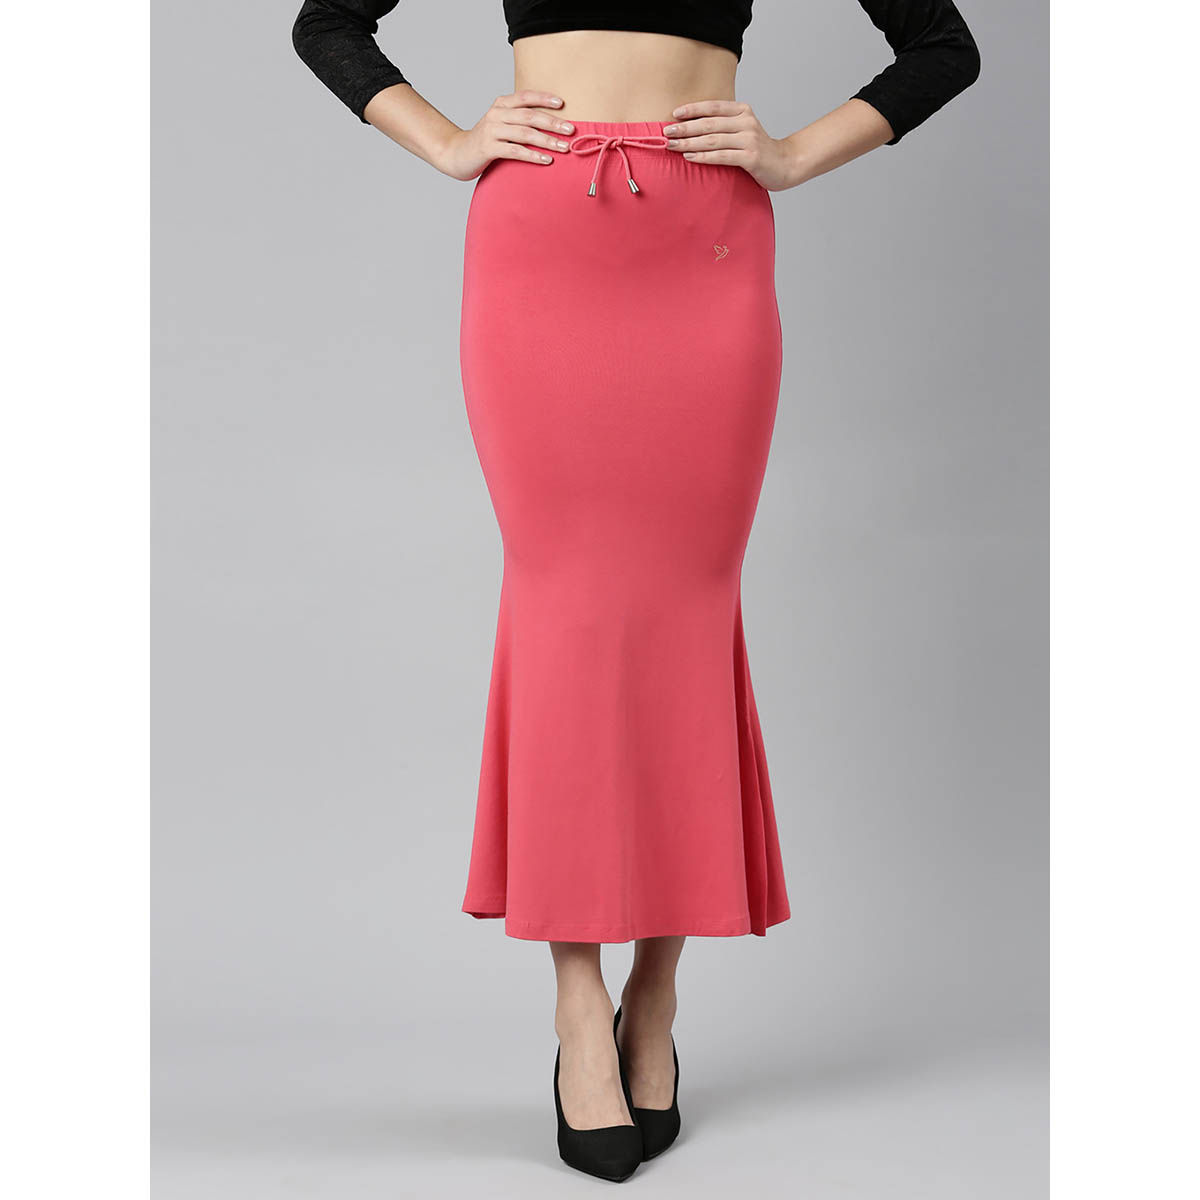 Buy TWIN BIRDS Super Soft Viscose Elastane Fabric Saree Skirt